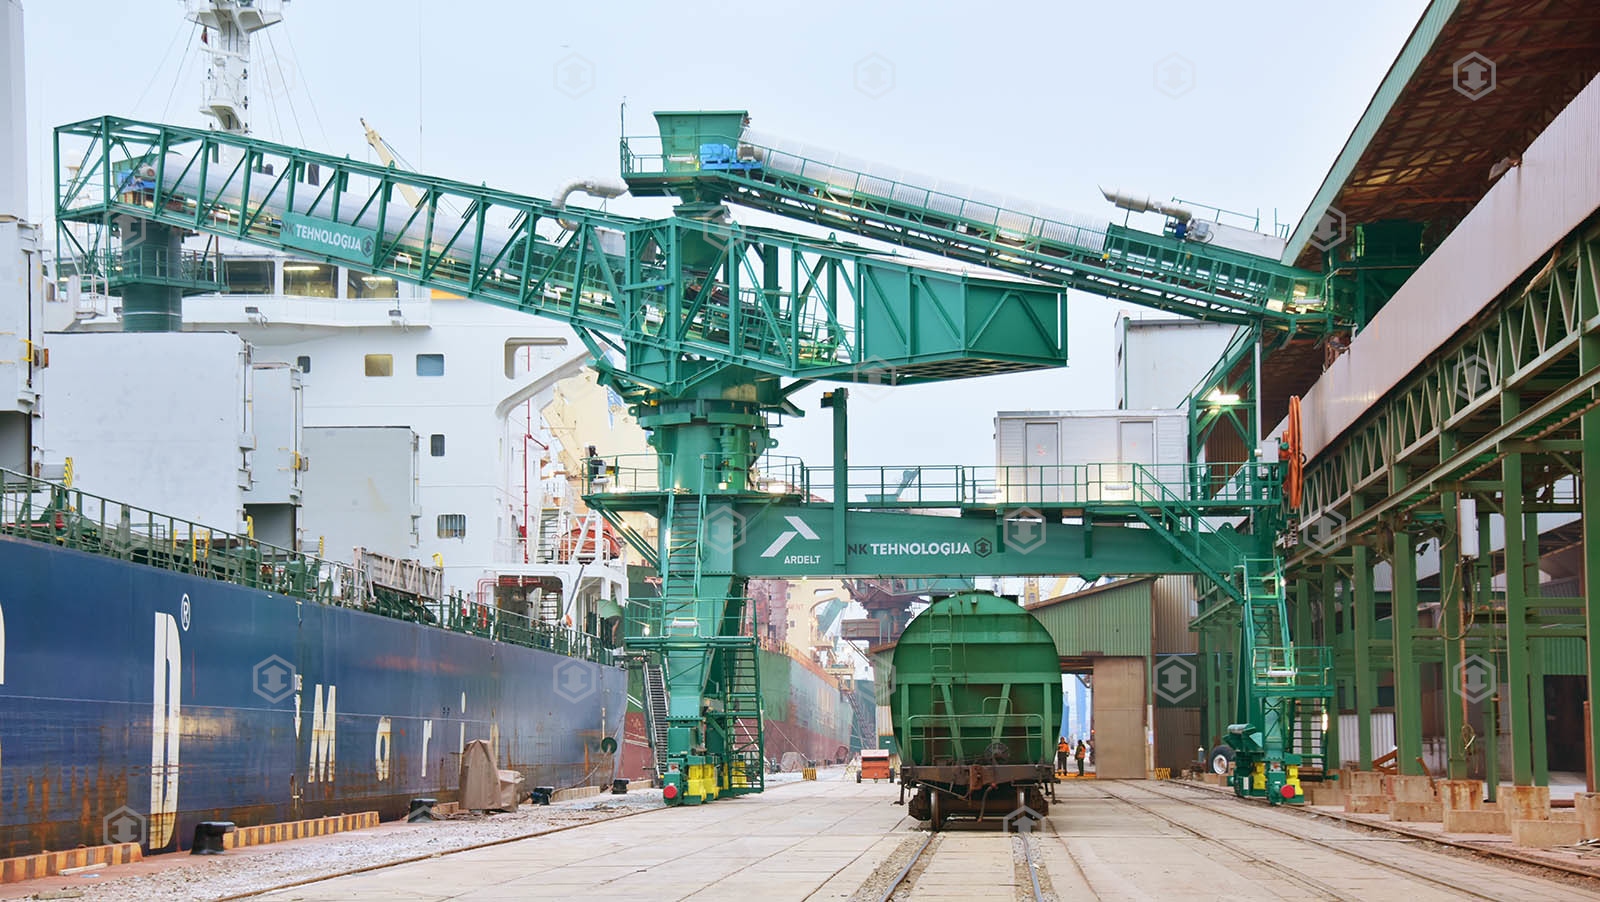 Shiploader SL-1200-2 for handling dry fertilizers. Project delivered for Lithuanian company "Biriu Kroviniu Terminalas" at port Klaipeda in 2015.